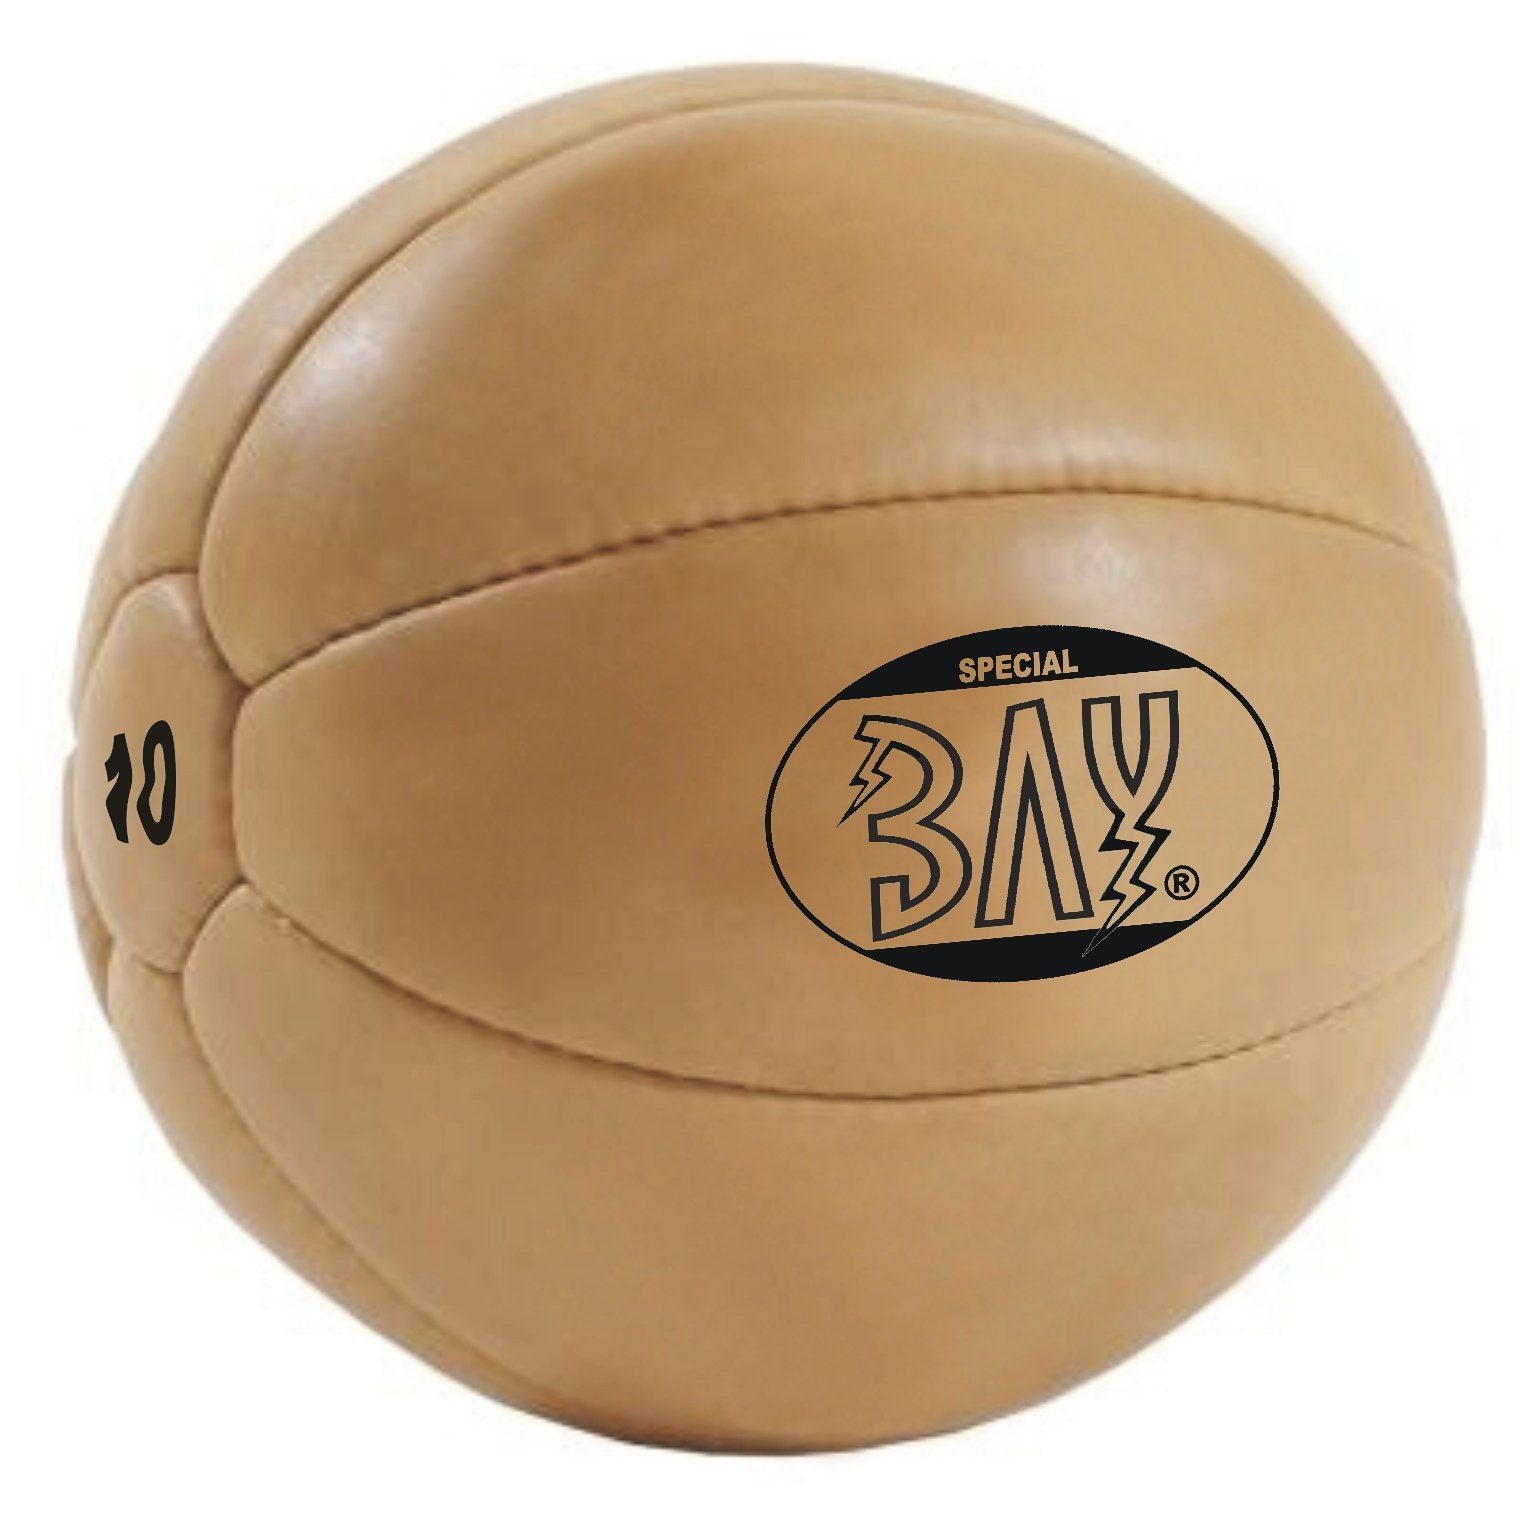 BAY-Sports Medizinball 10 kg Fitnessball Kunstleder 10kg Vollball braun natur Kraftsport klassische Profi Kraftball, Trainingsball Ausführung